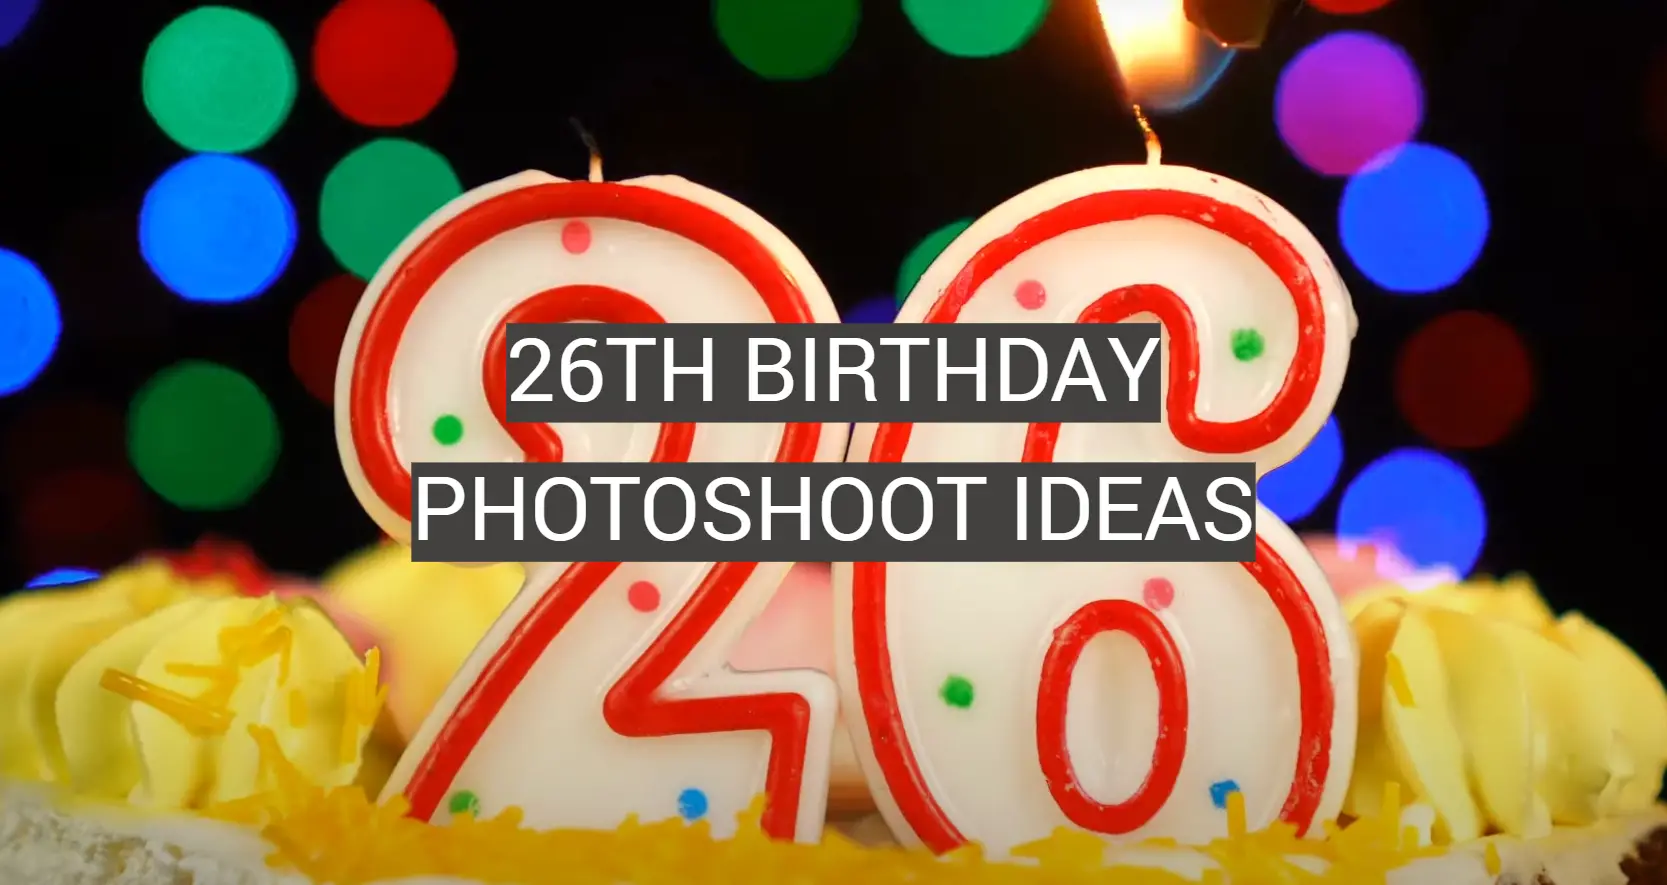 26th Birthday Photoshoot Ideas - FotoProfy